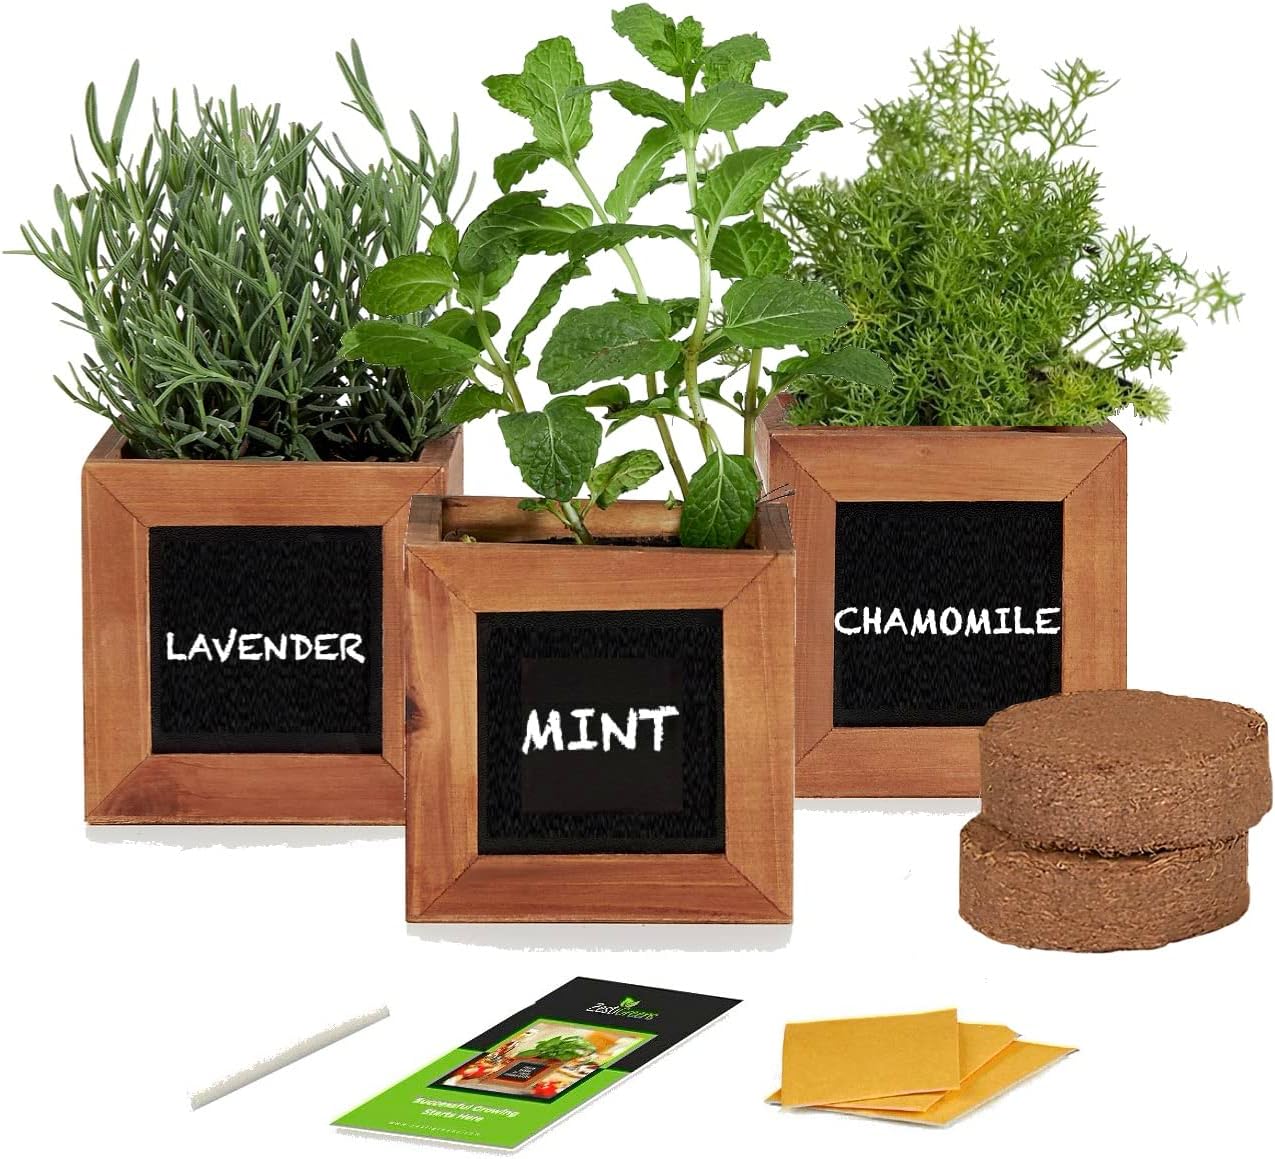 Indoor Herb Growing Kit - Herbal Tea Plants Included in Tea Growing Kits are Lavender, Chamomile  Mint Seeds. Medicinal Herb Plants Seed Kit